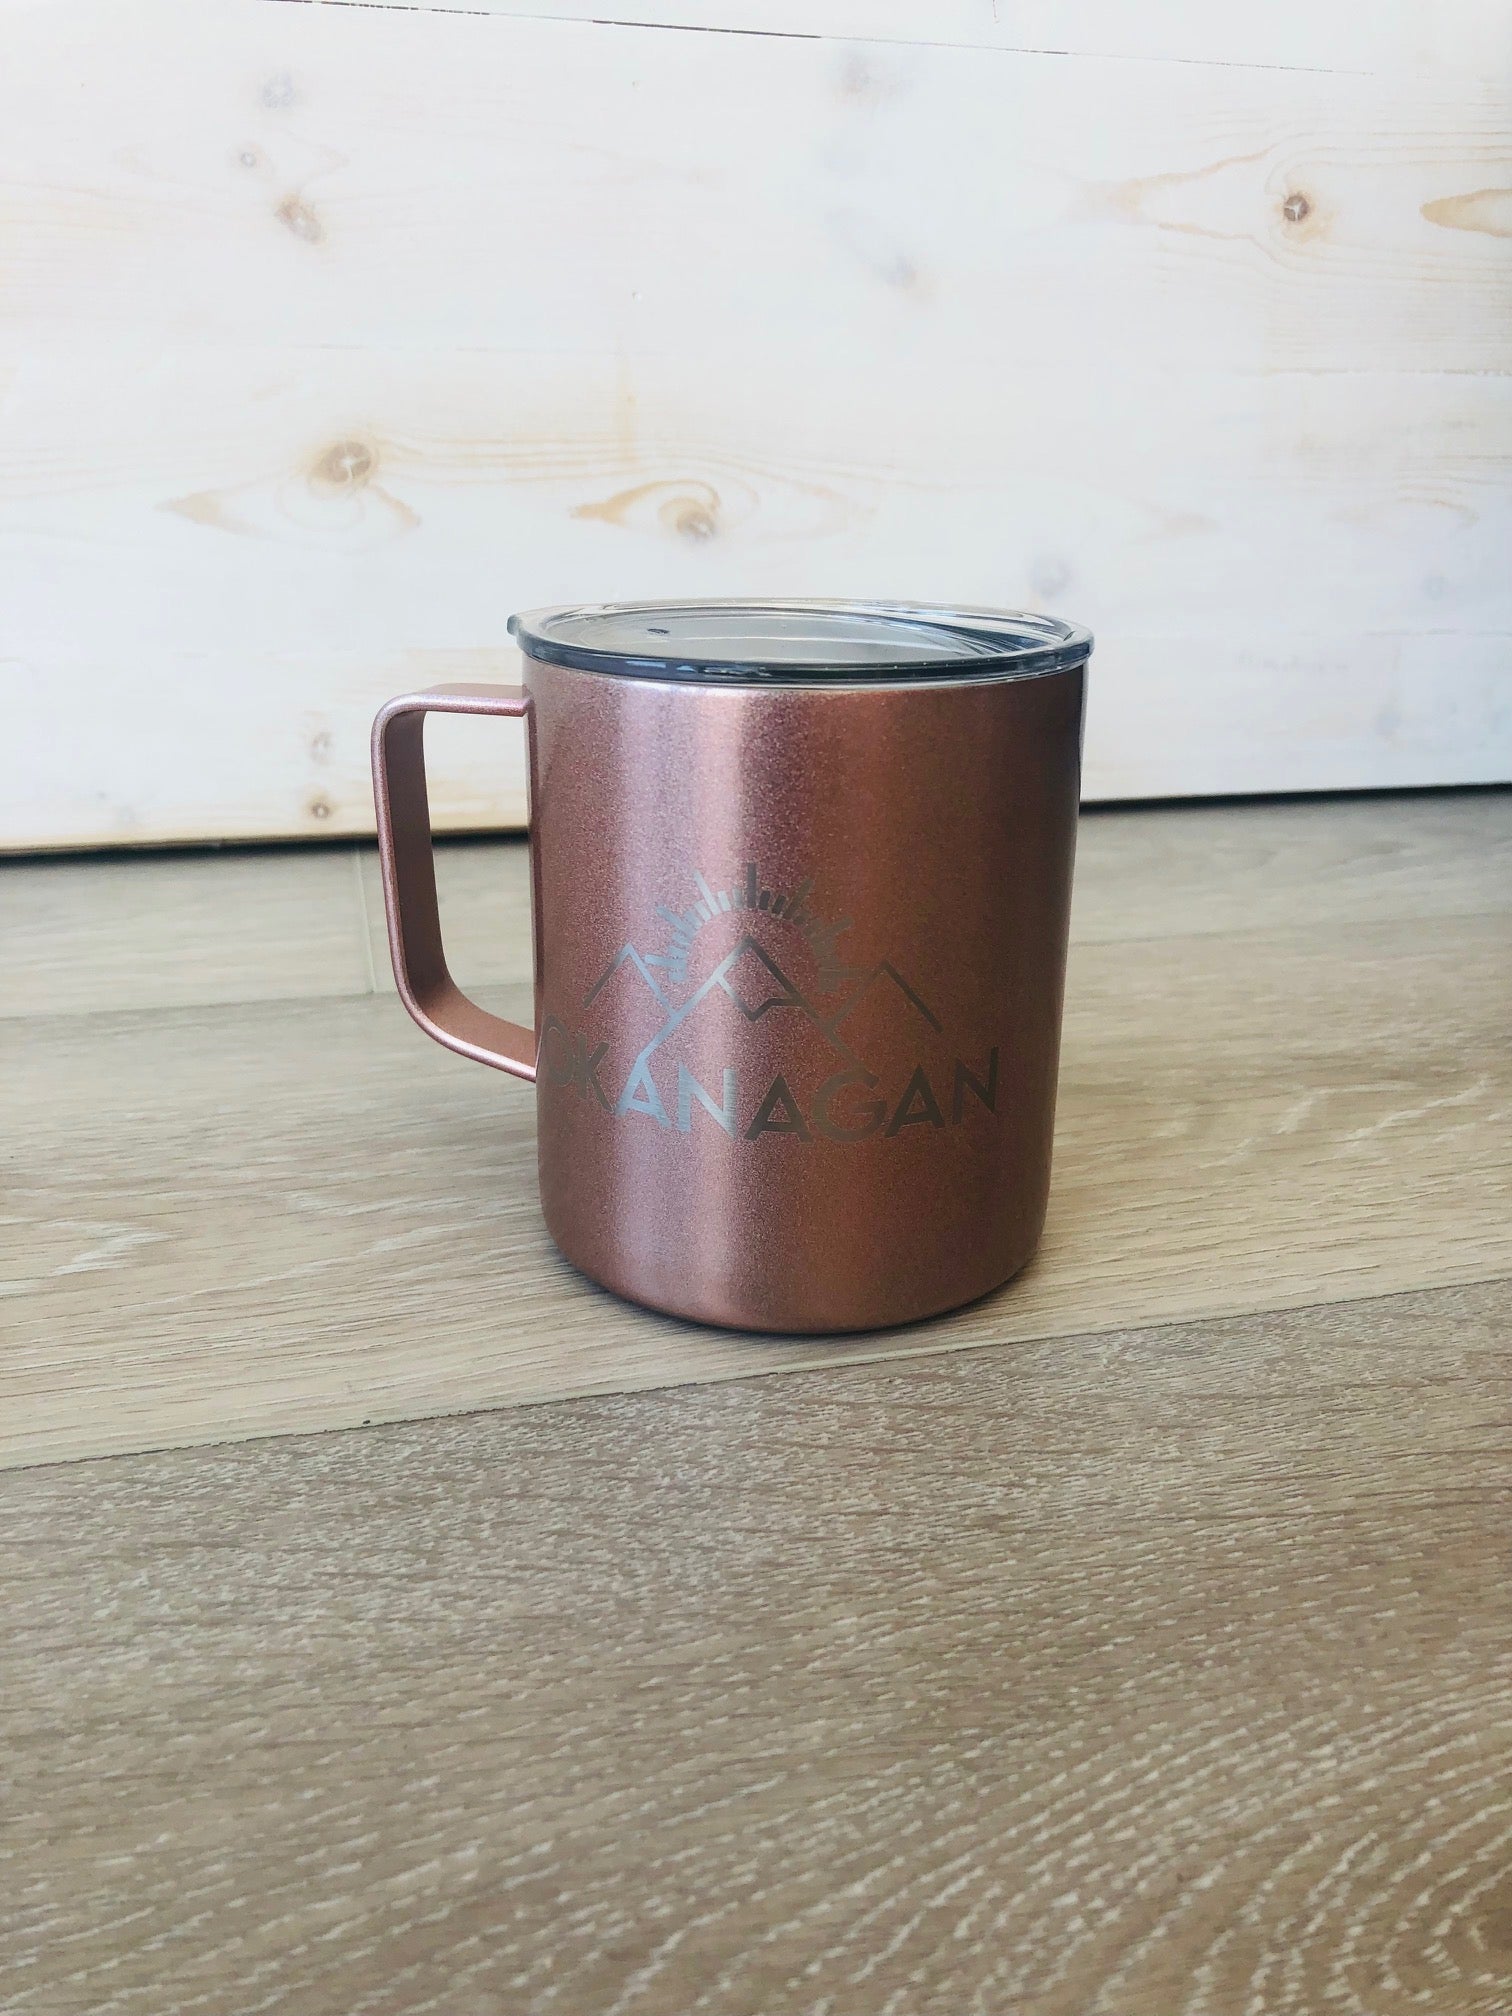 North Okanagan Apparel Insulated Mug